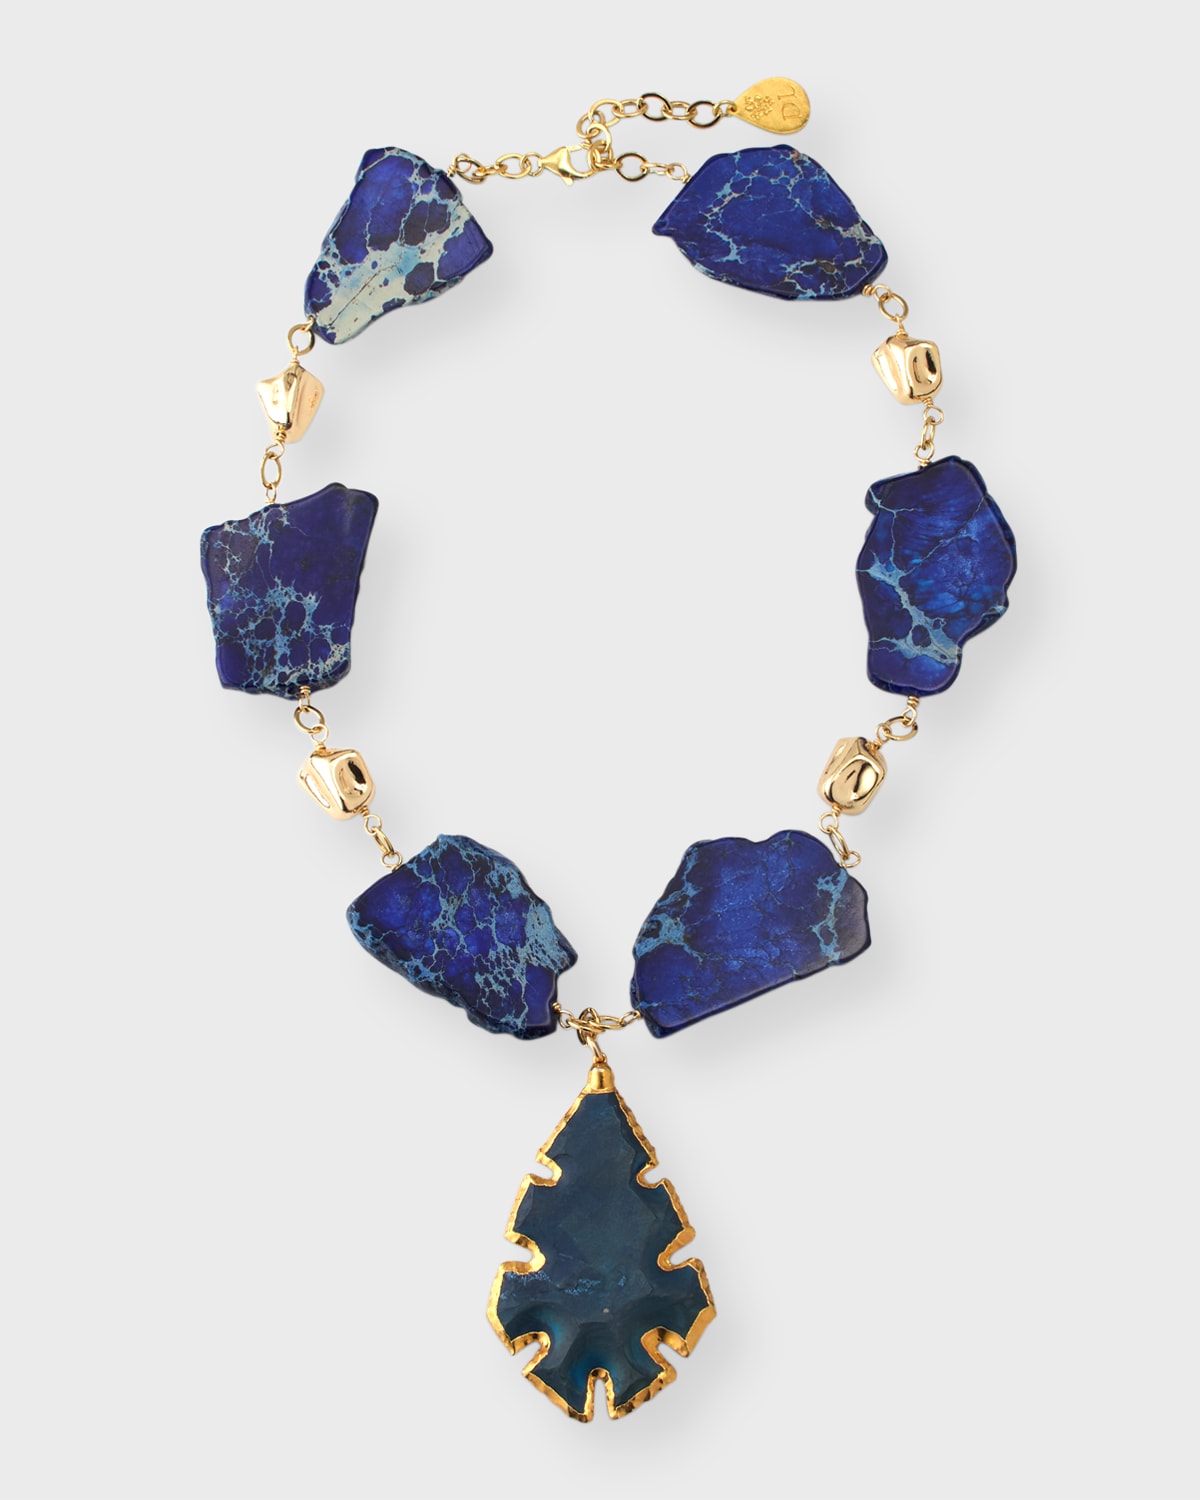 Devon Leigh Carved Blue Pendant Necklace